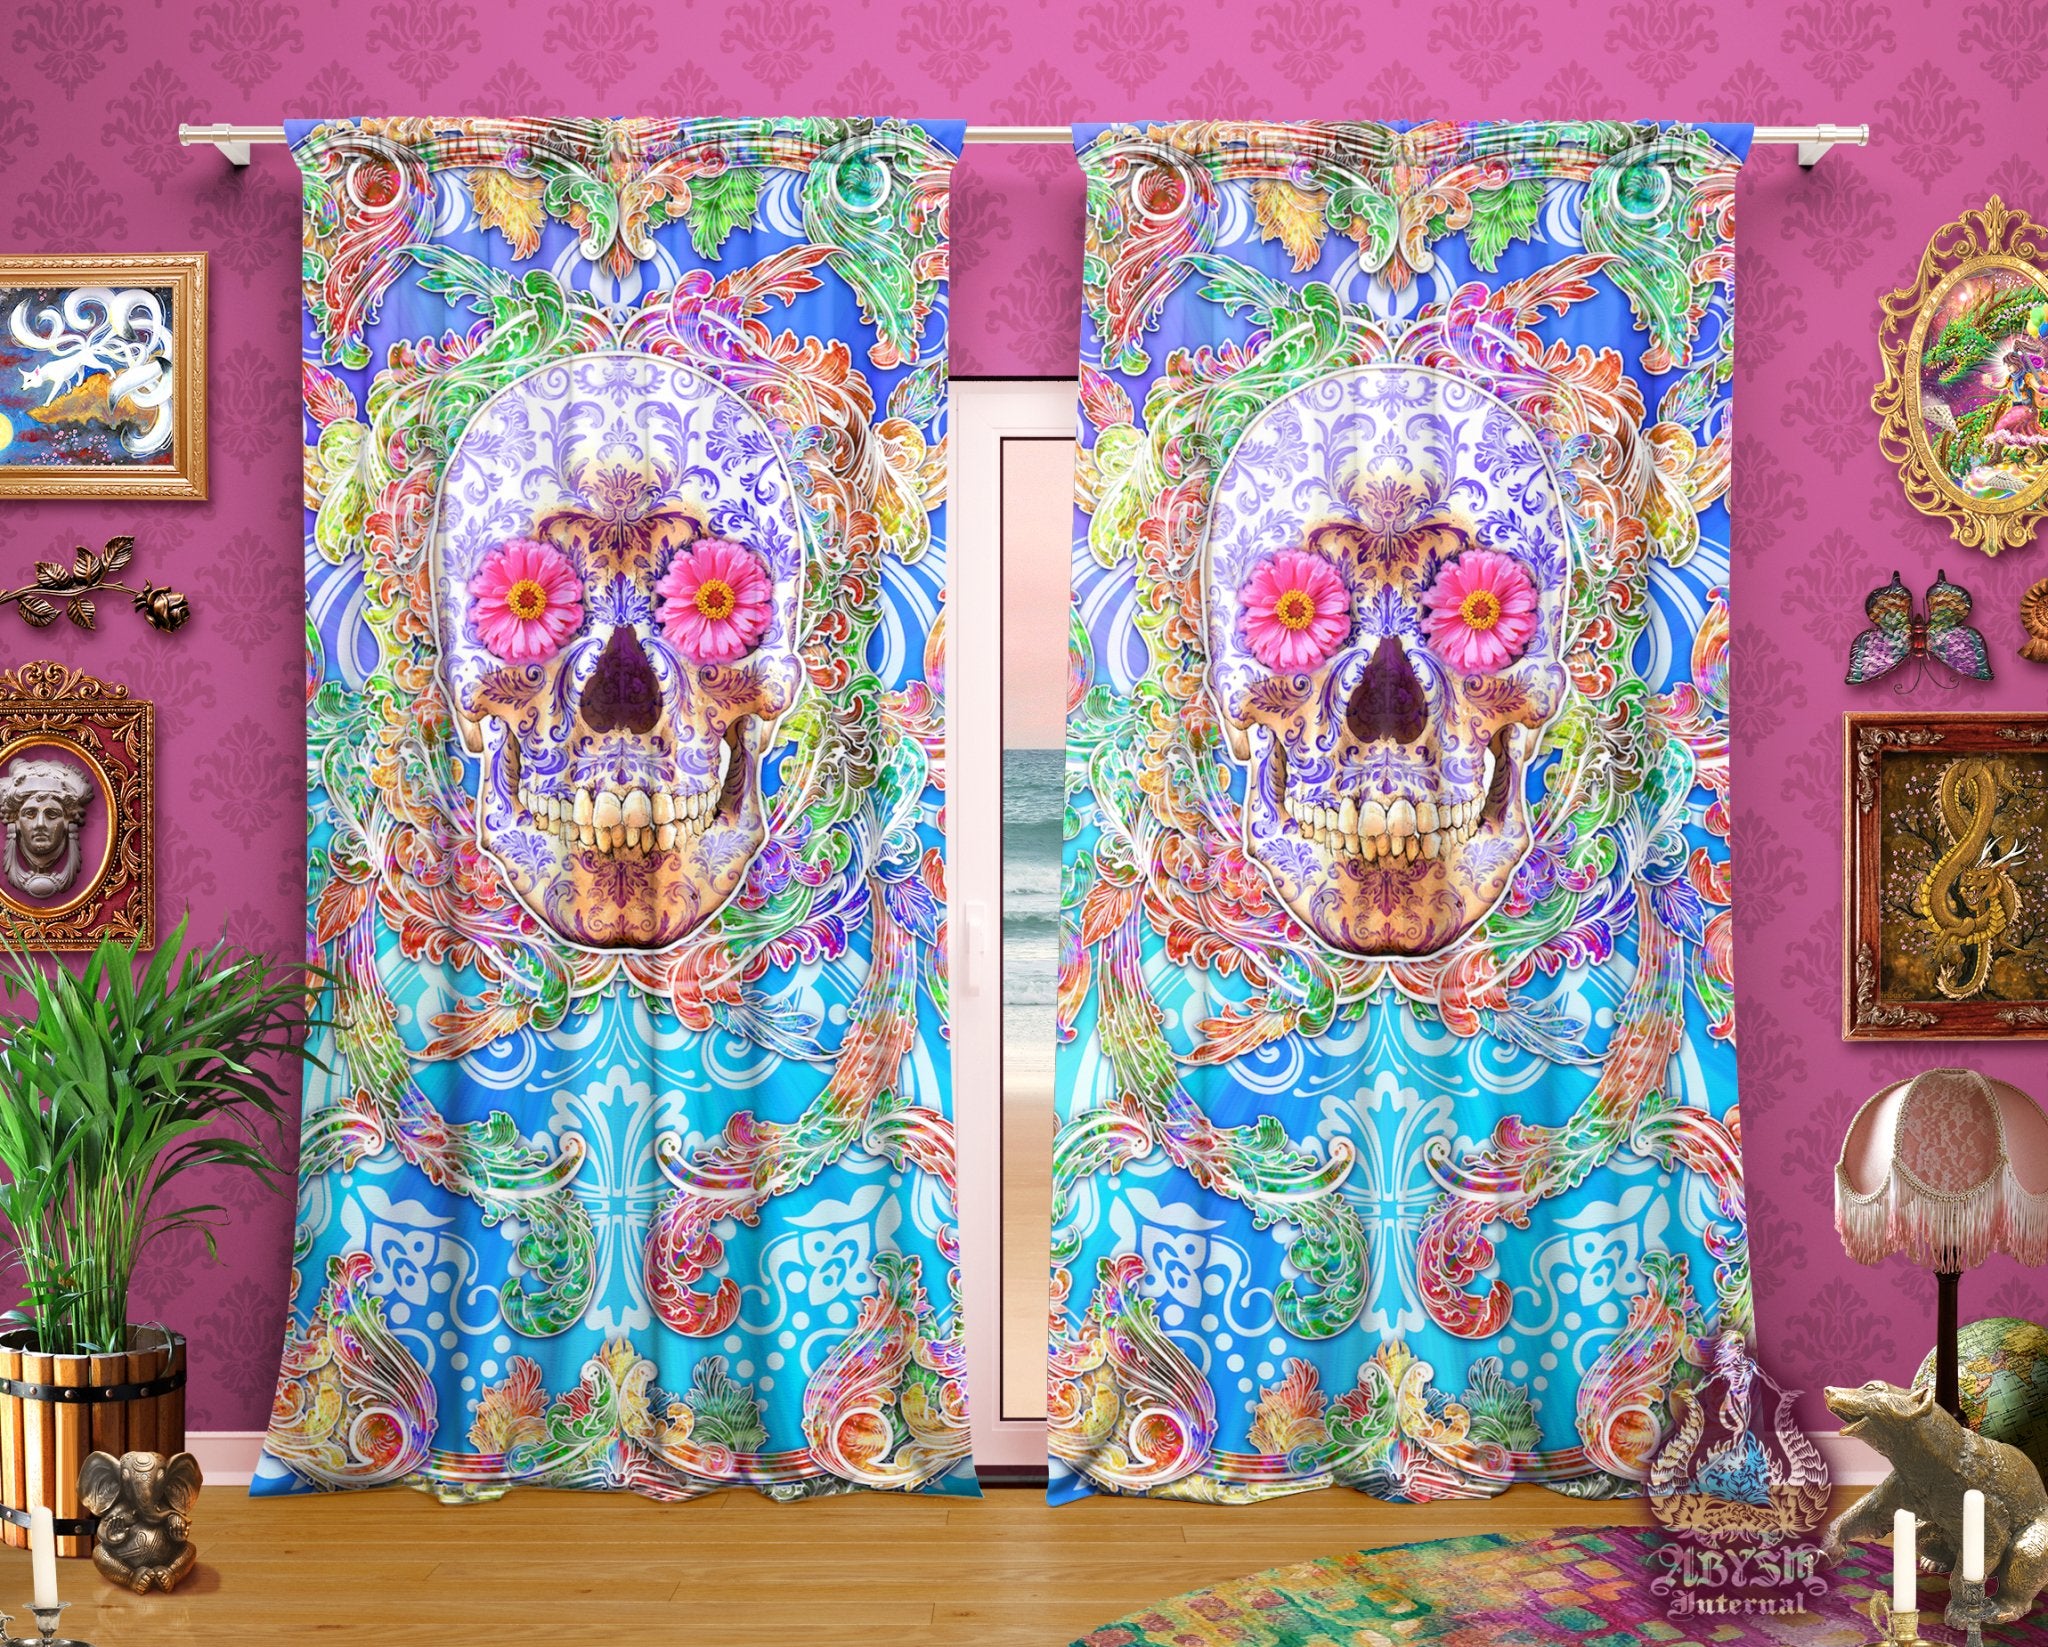 Boho Curtains, 50x84' Printed Window Panels, Sugar Skull Art Print, Festive Summer Decor - Psy Purple with Rubies or Flowers, 2 versions - Abysm Internal